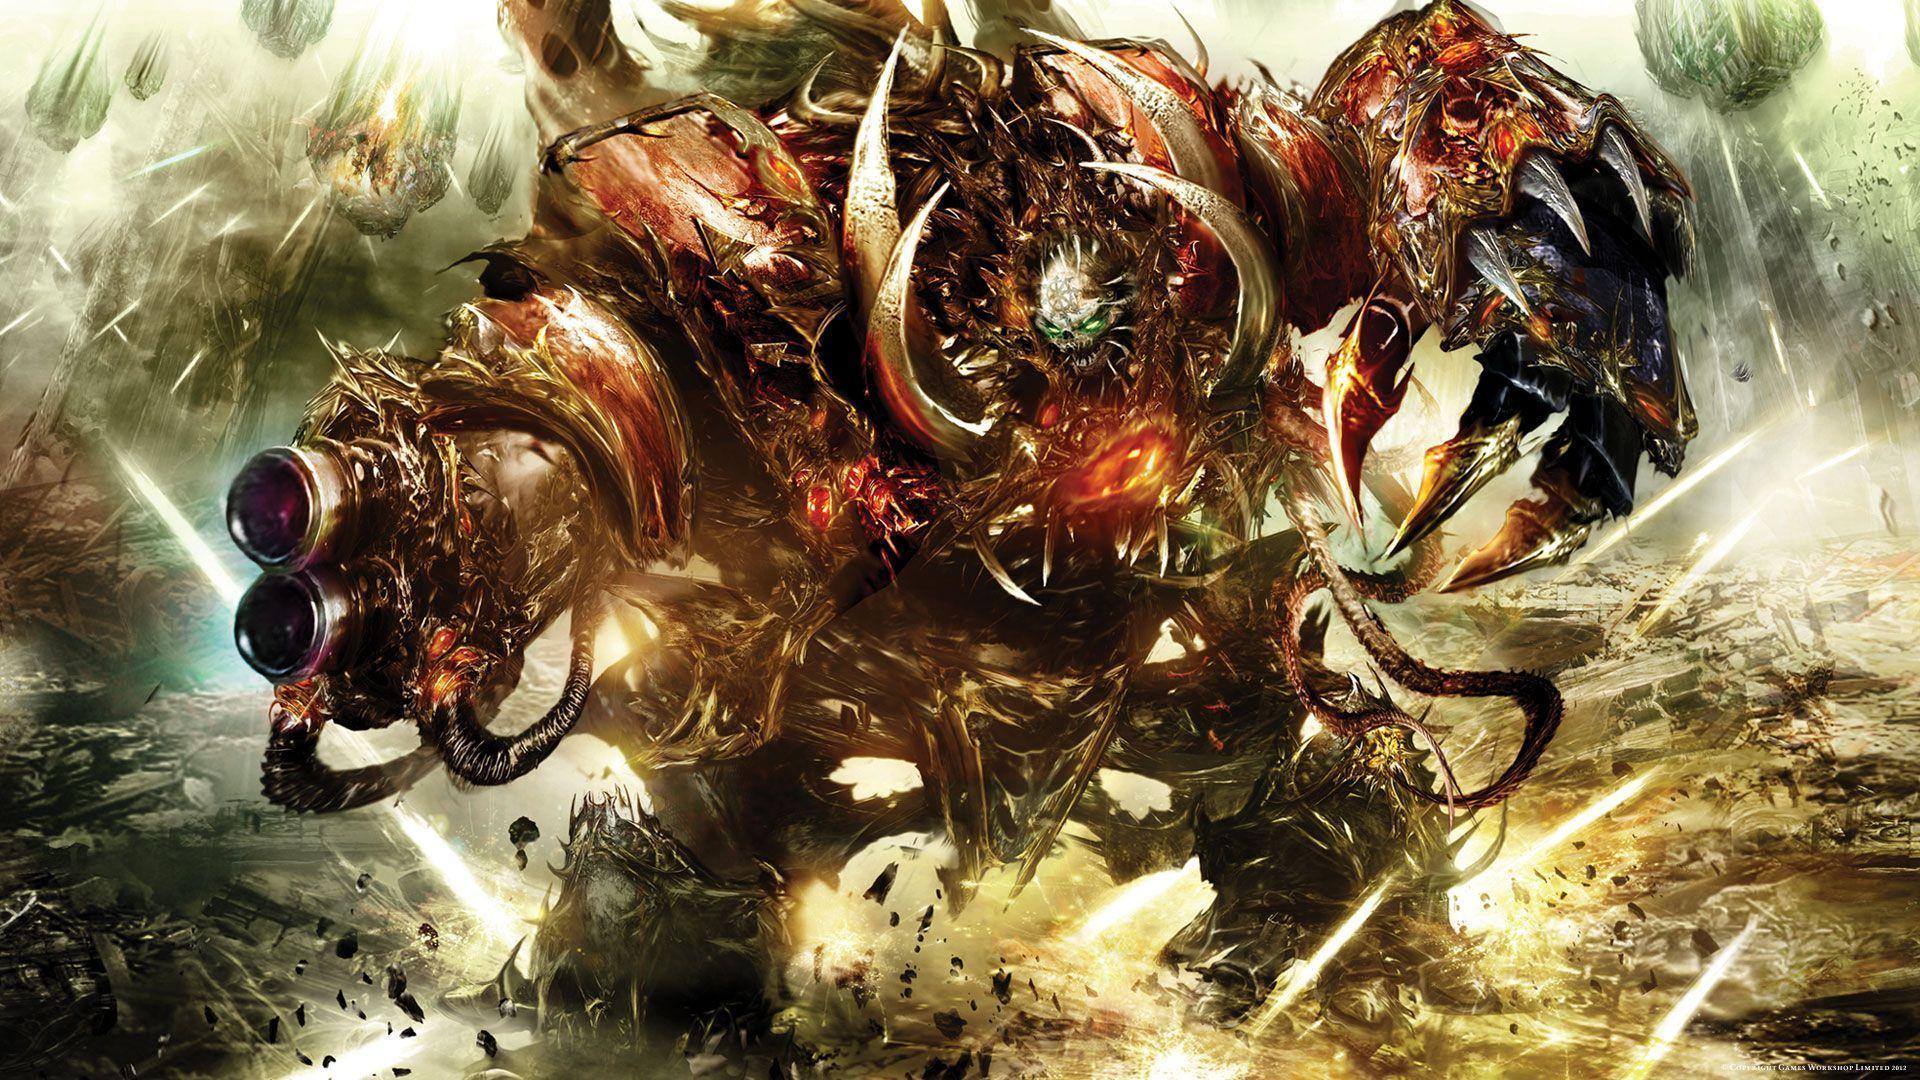 image For > Warhammer 40k Dreadnought Wallpaper